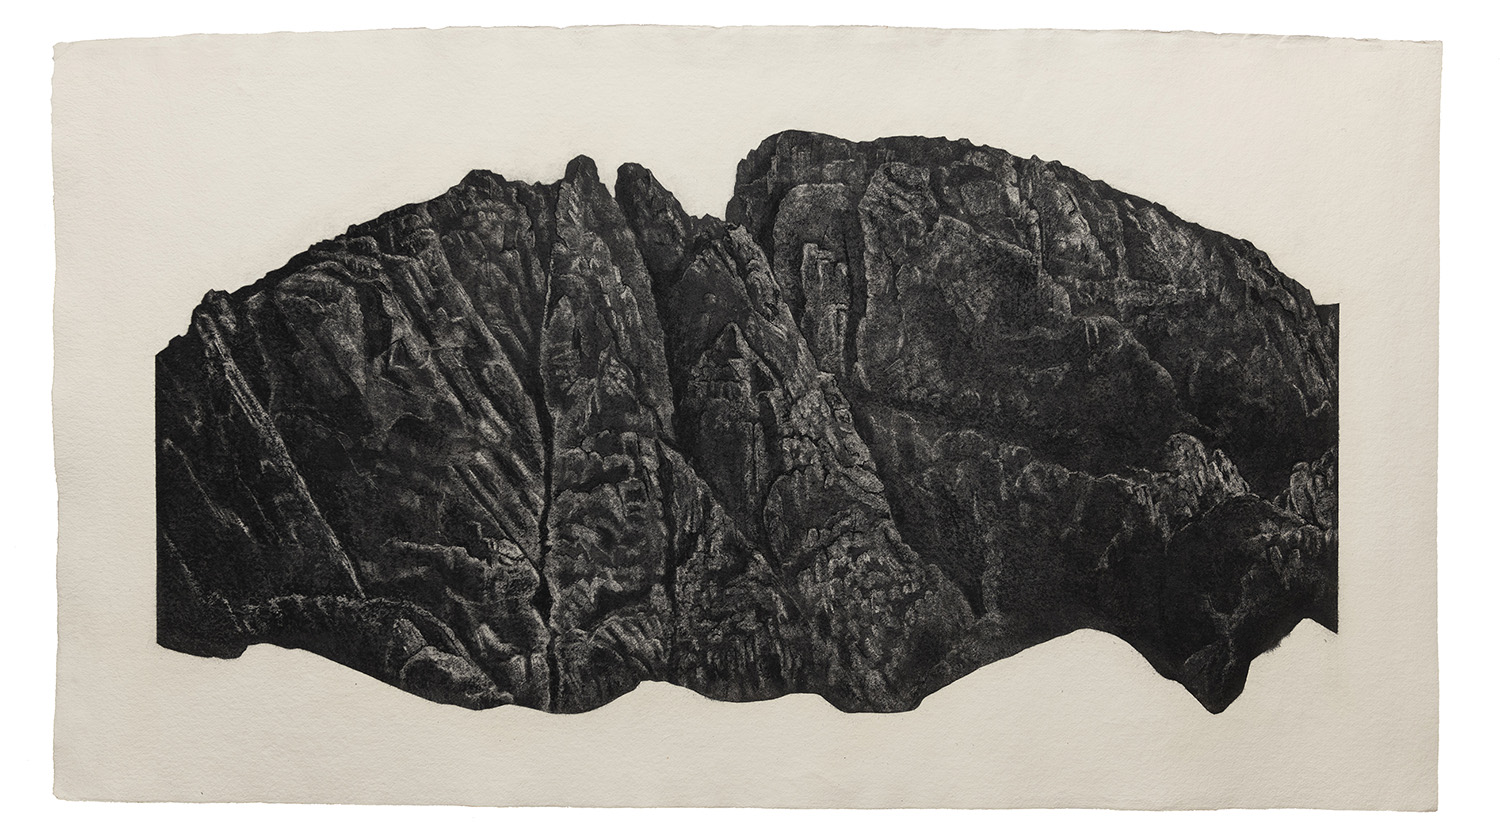 Black Mountain (2018-19). Charcoal and conté on khadi paper, 78 x 140 cm.